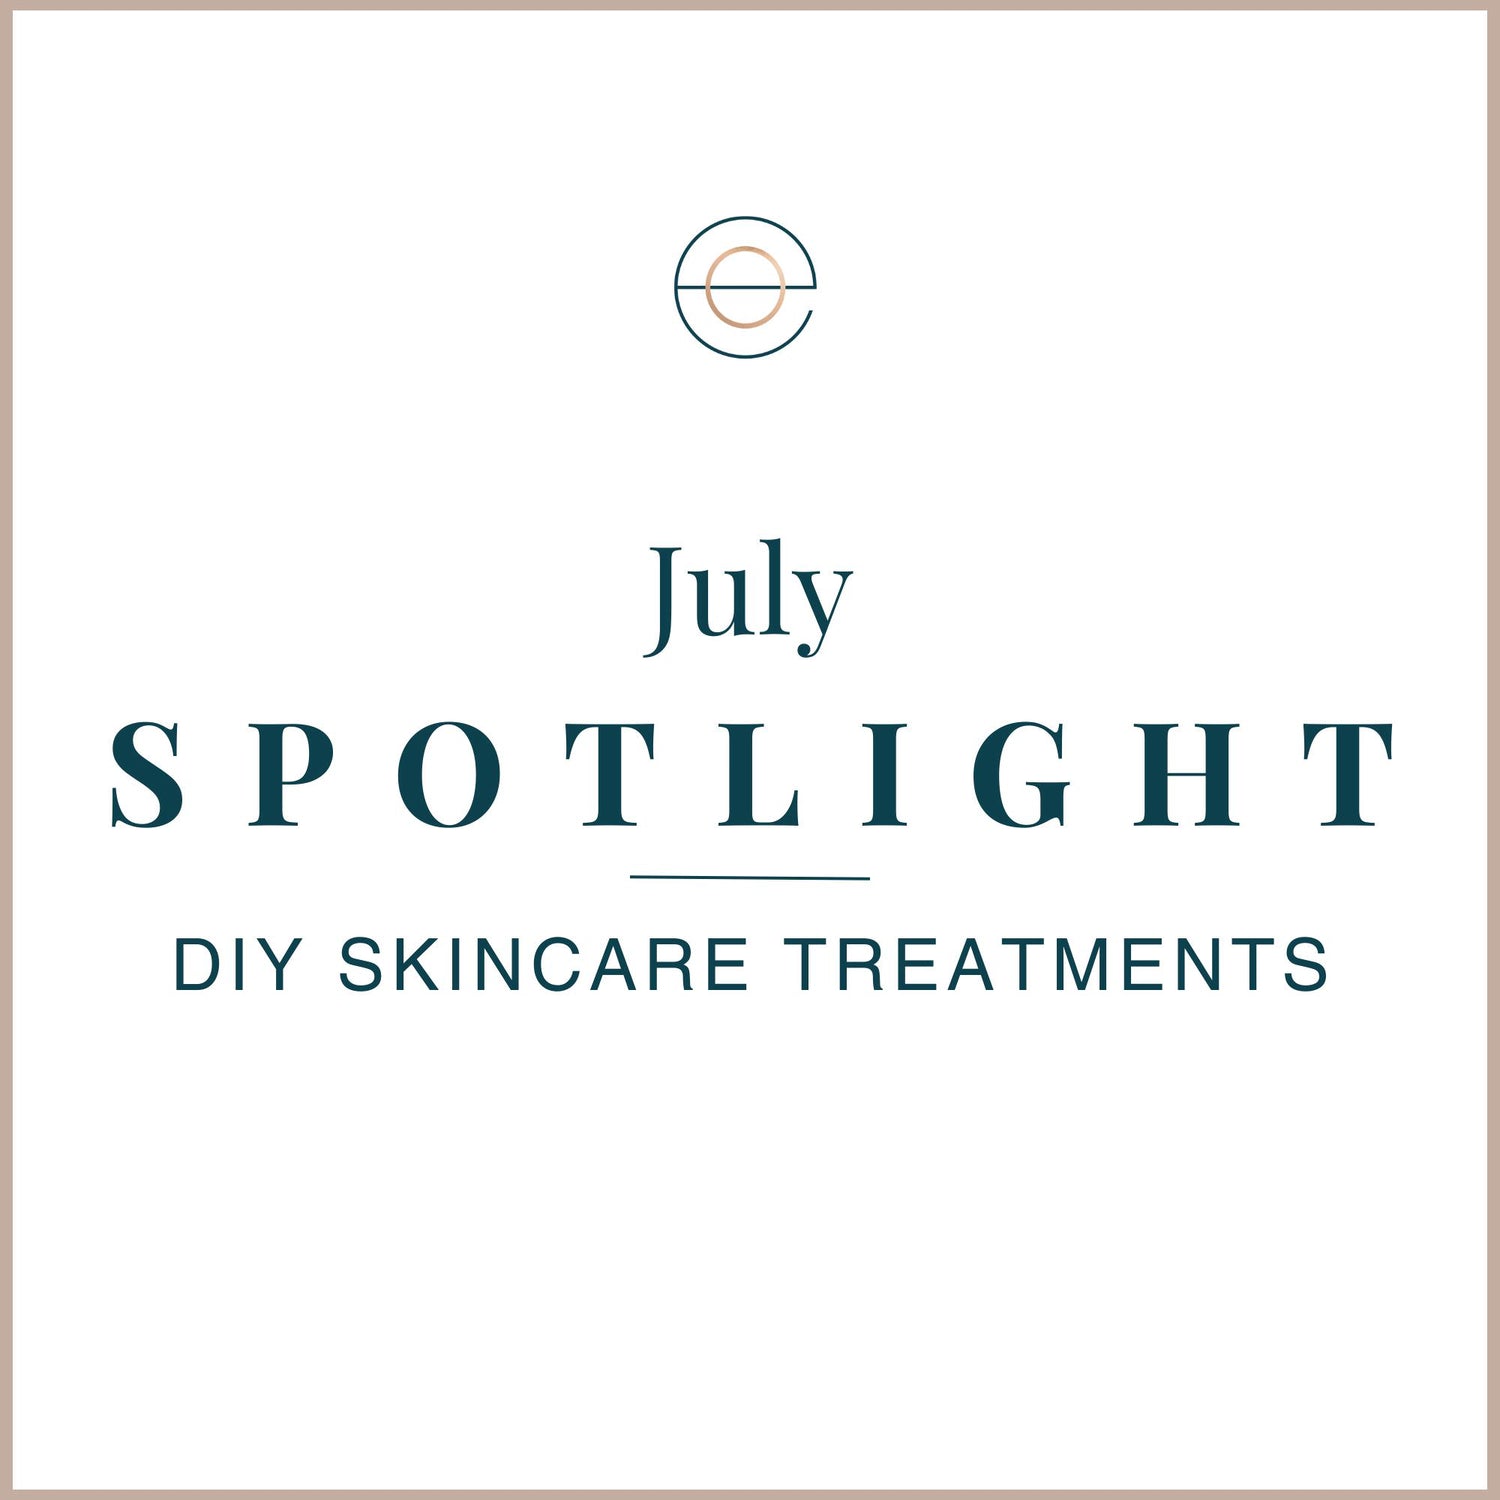 DIY Skincare Treatments